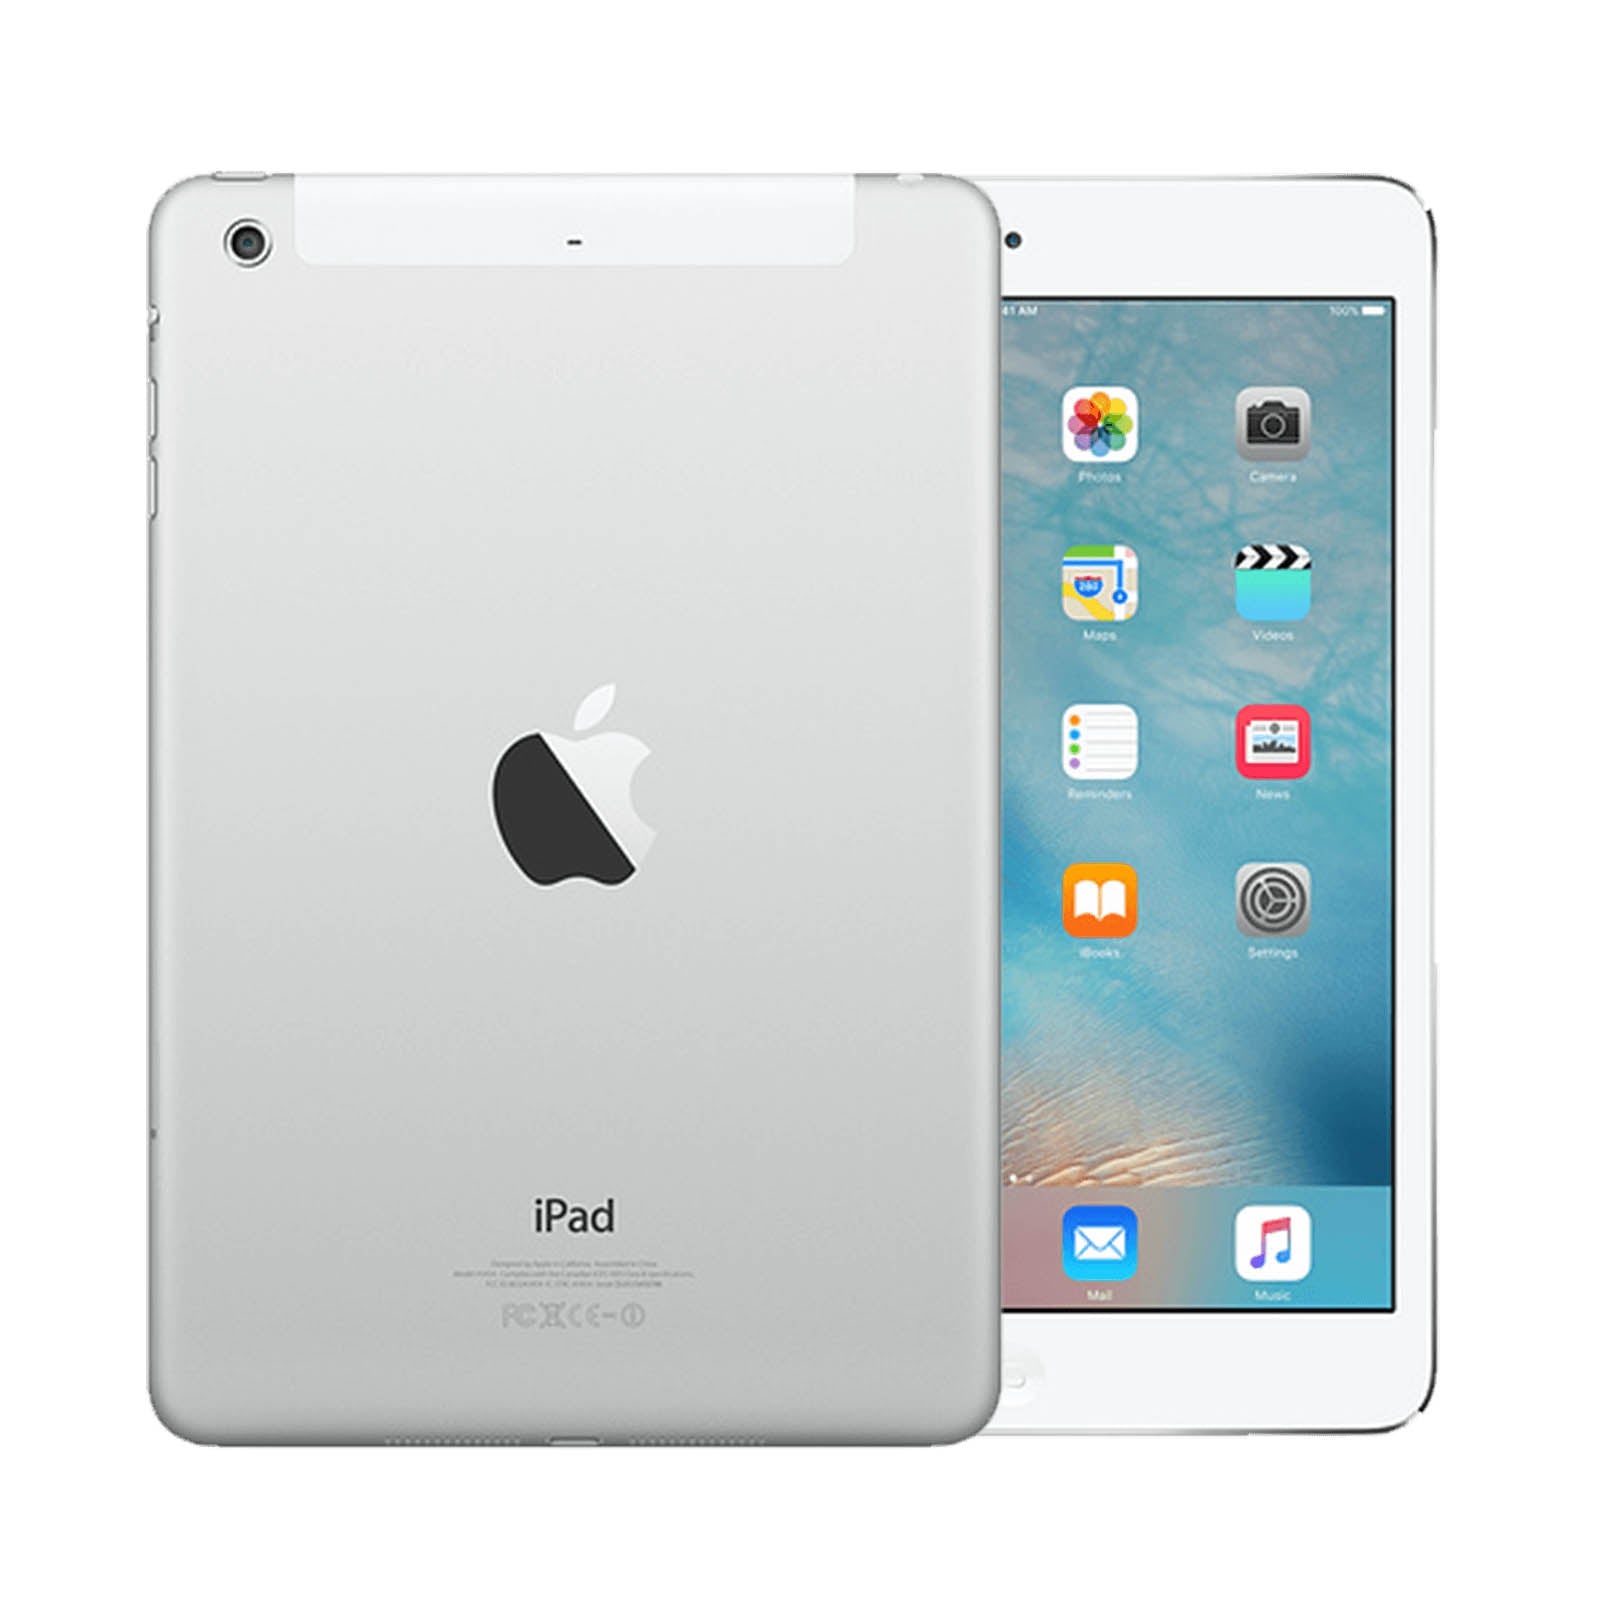 Apple iPad mini 3 16GB Silver Good - Unlocked